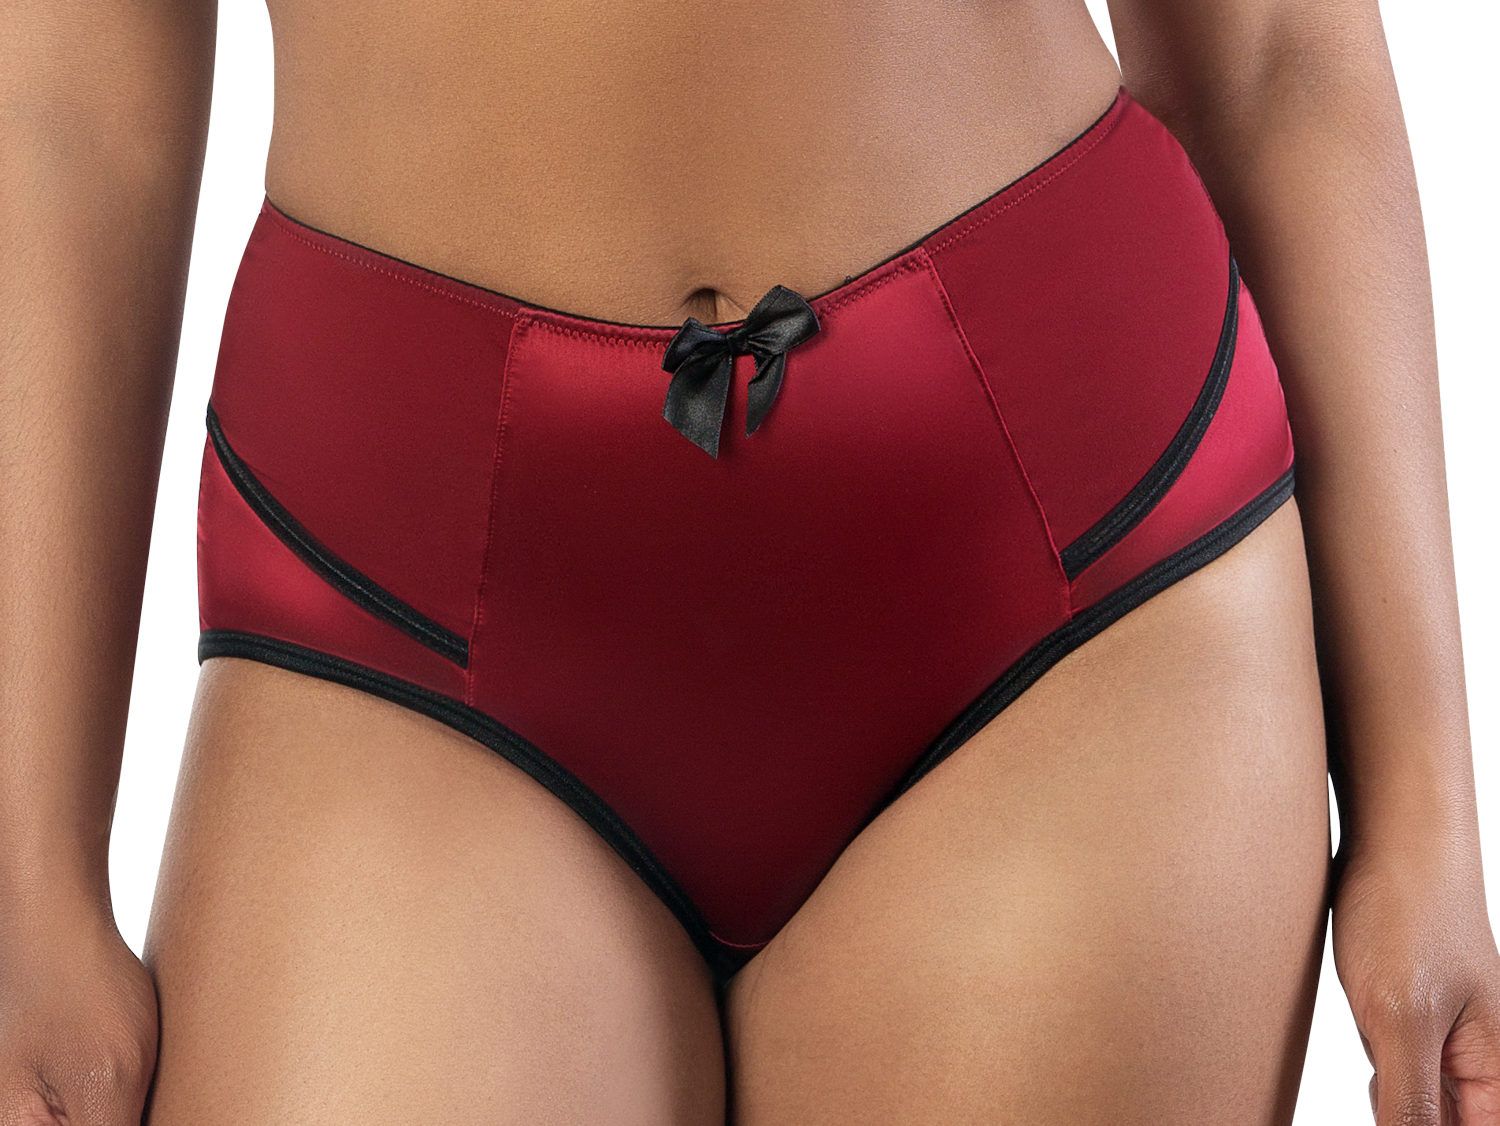 Lumingerie High underwear Parfait bras Charlotte | Briefs and Rio Lingerie busts Waist Red for big